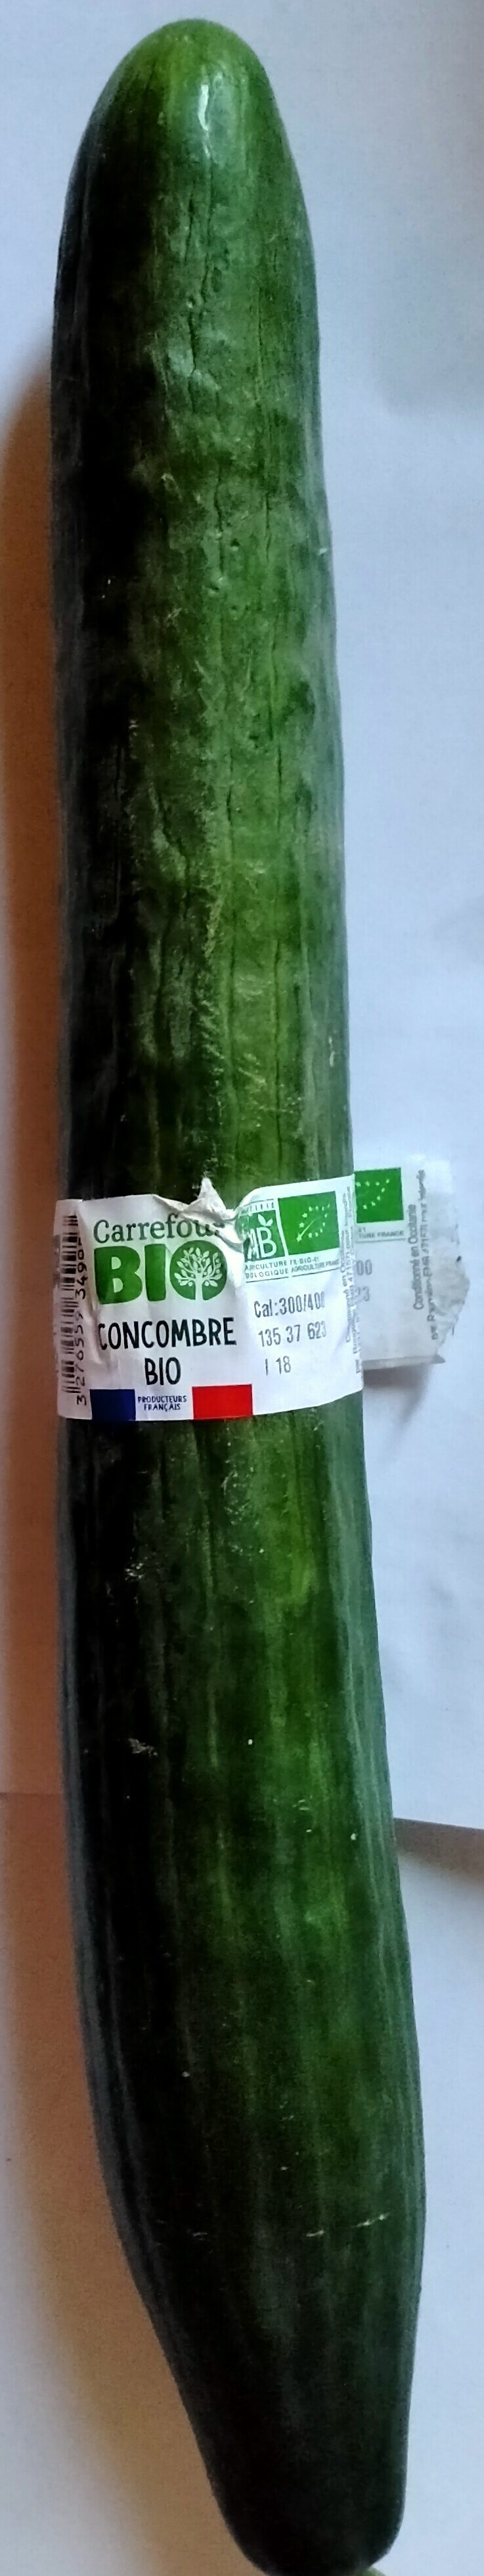 Concombre - Product - fr